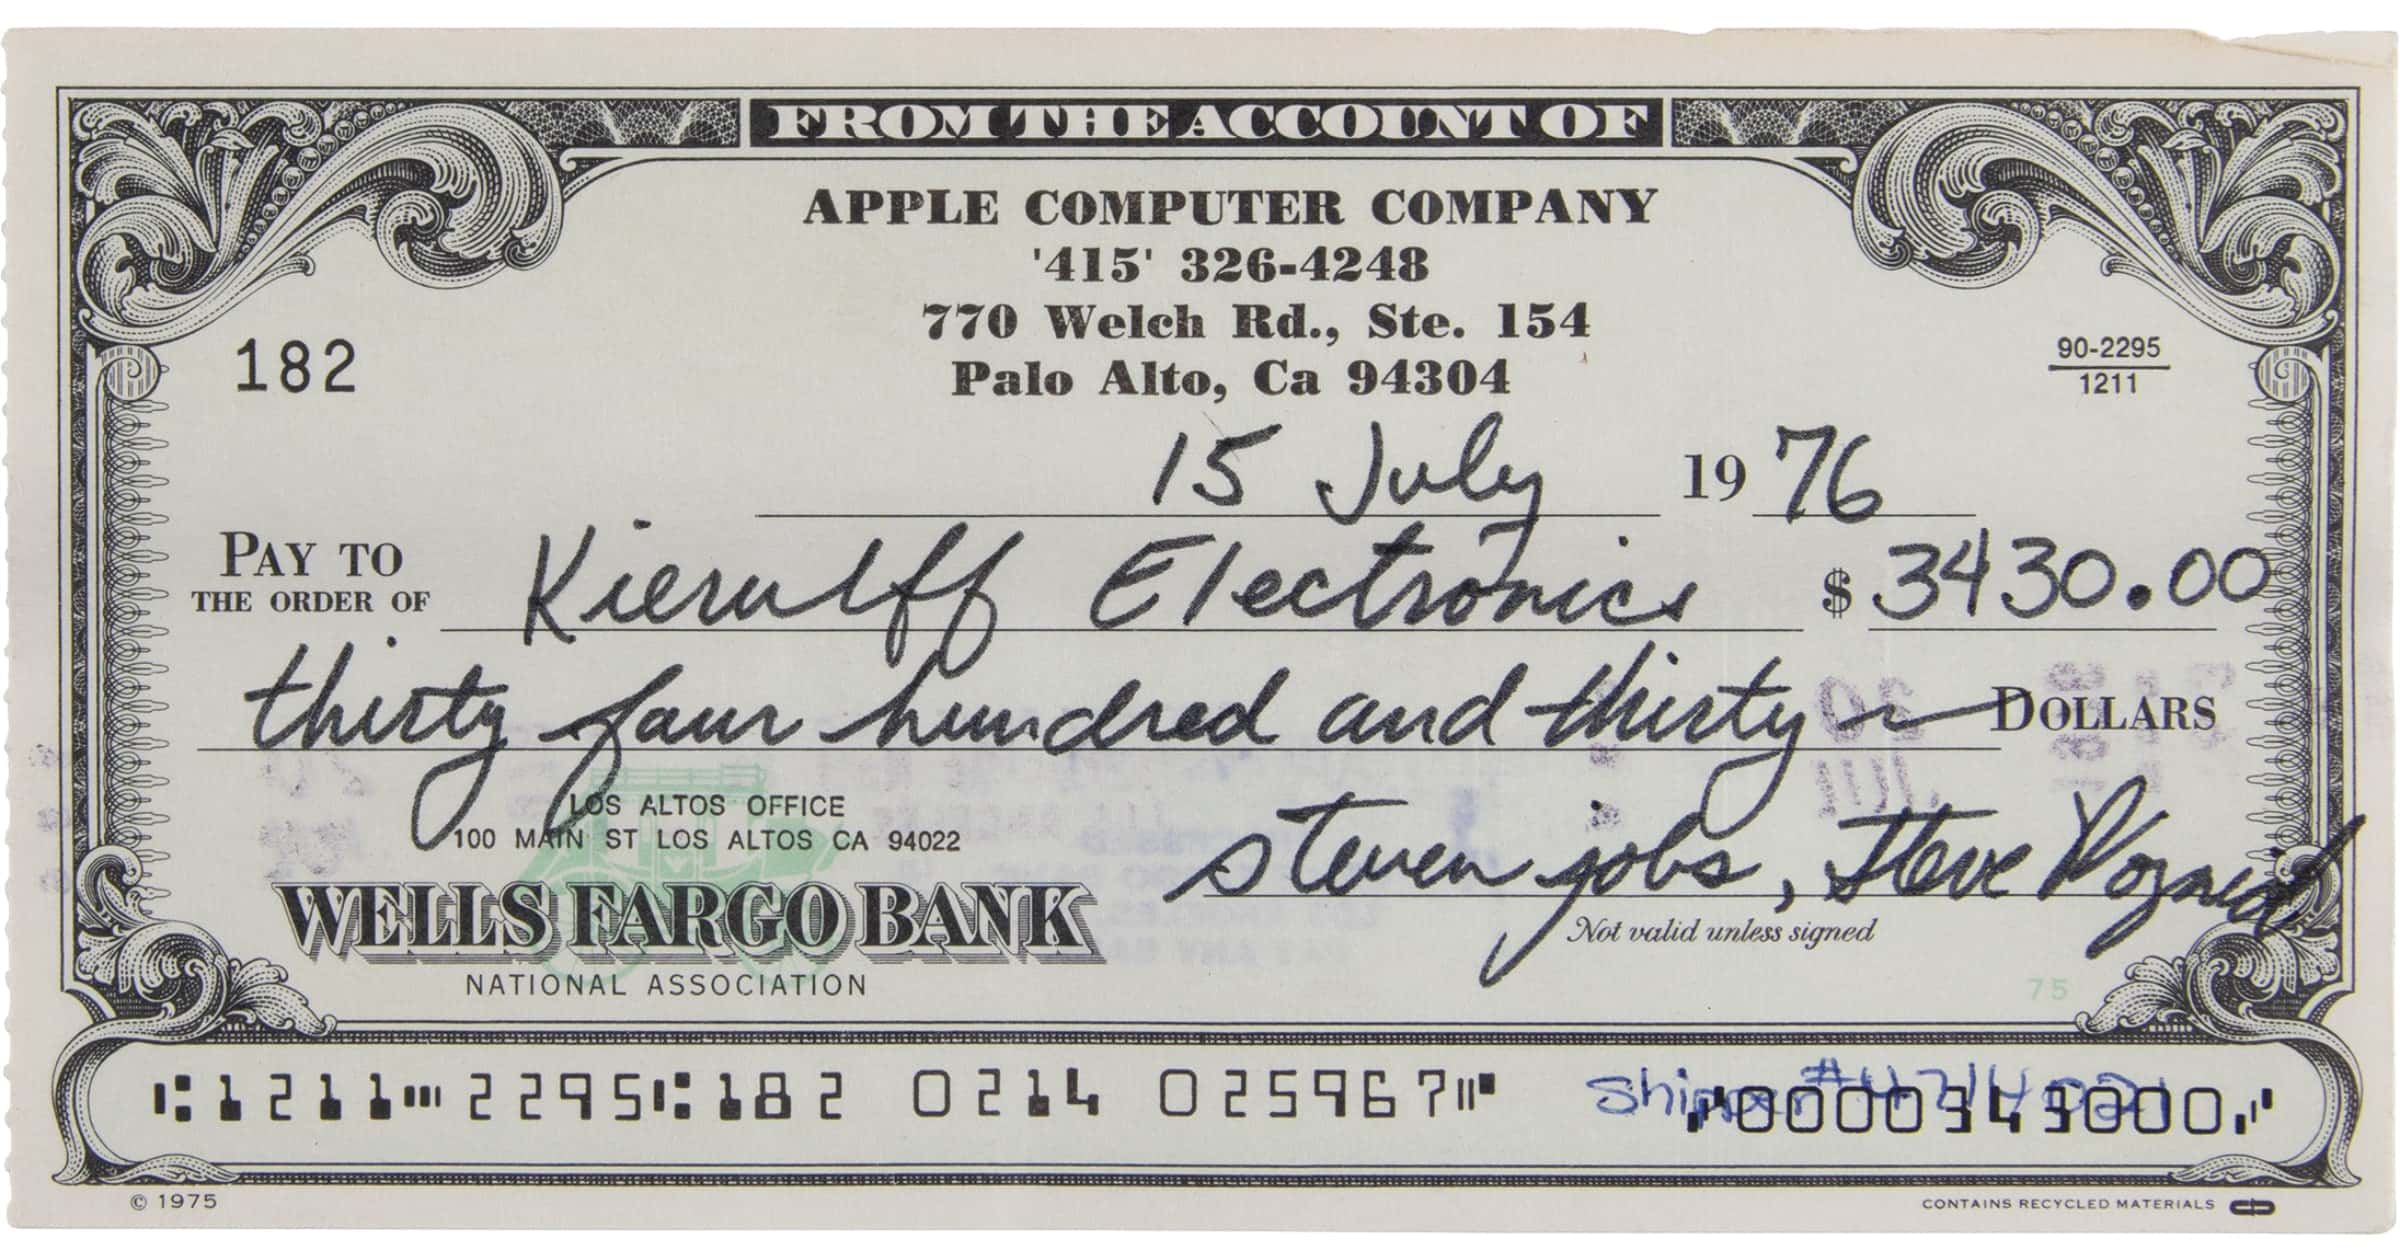 1976 Apple Computer check signed by Steve Jobs and Steve Wozniak